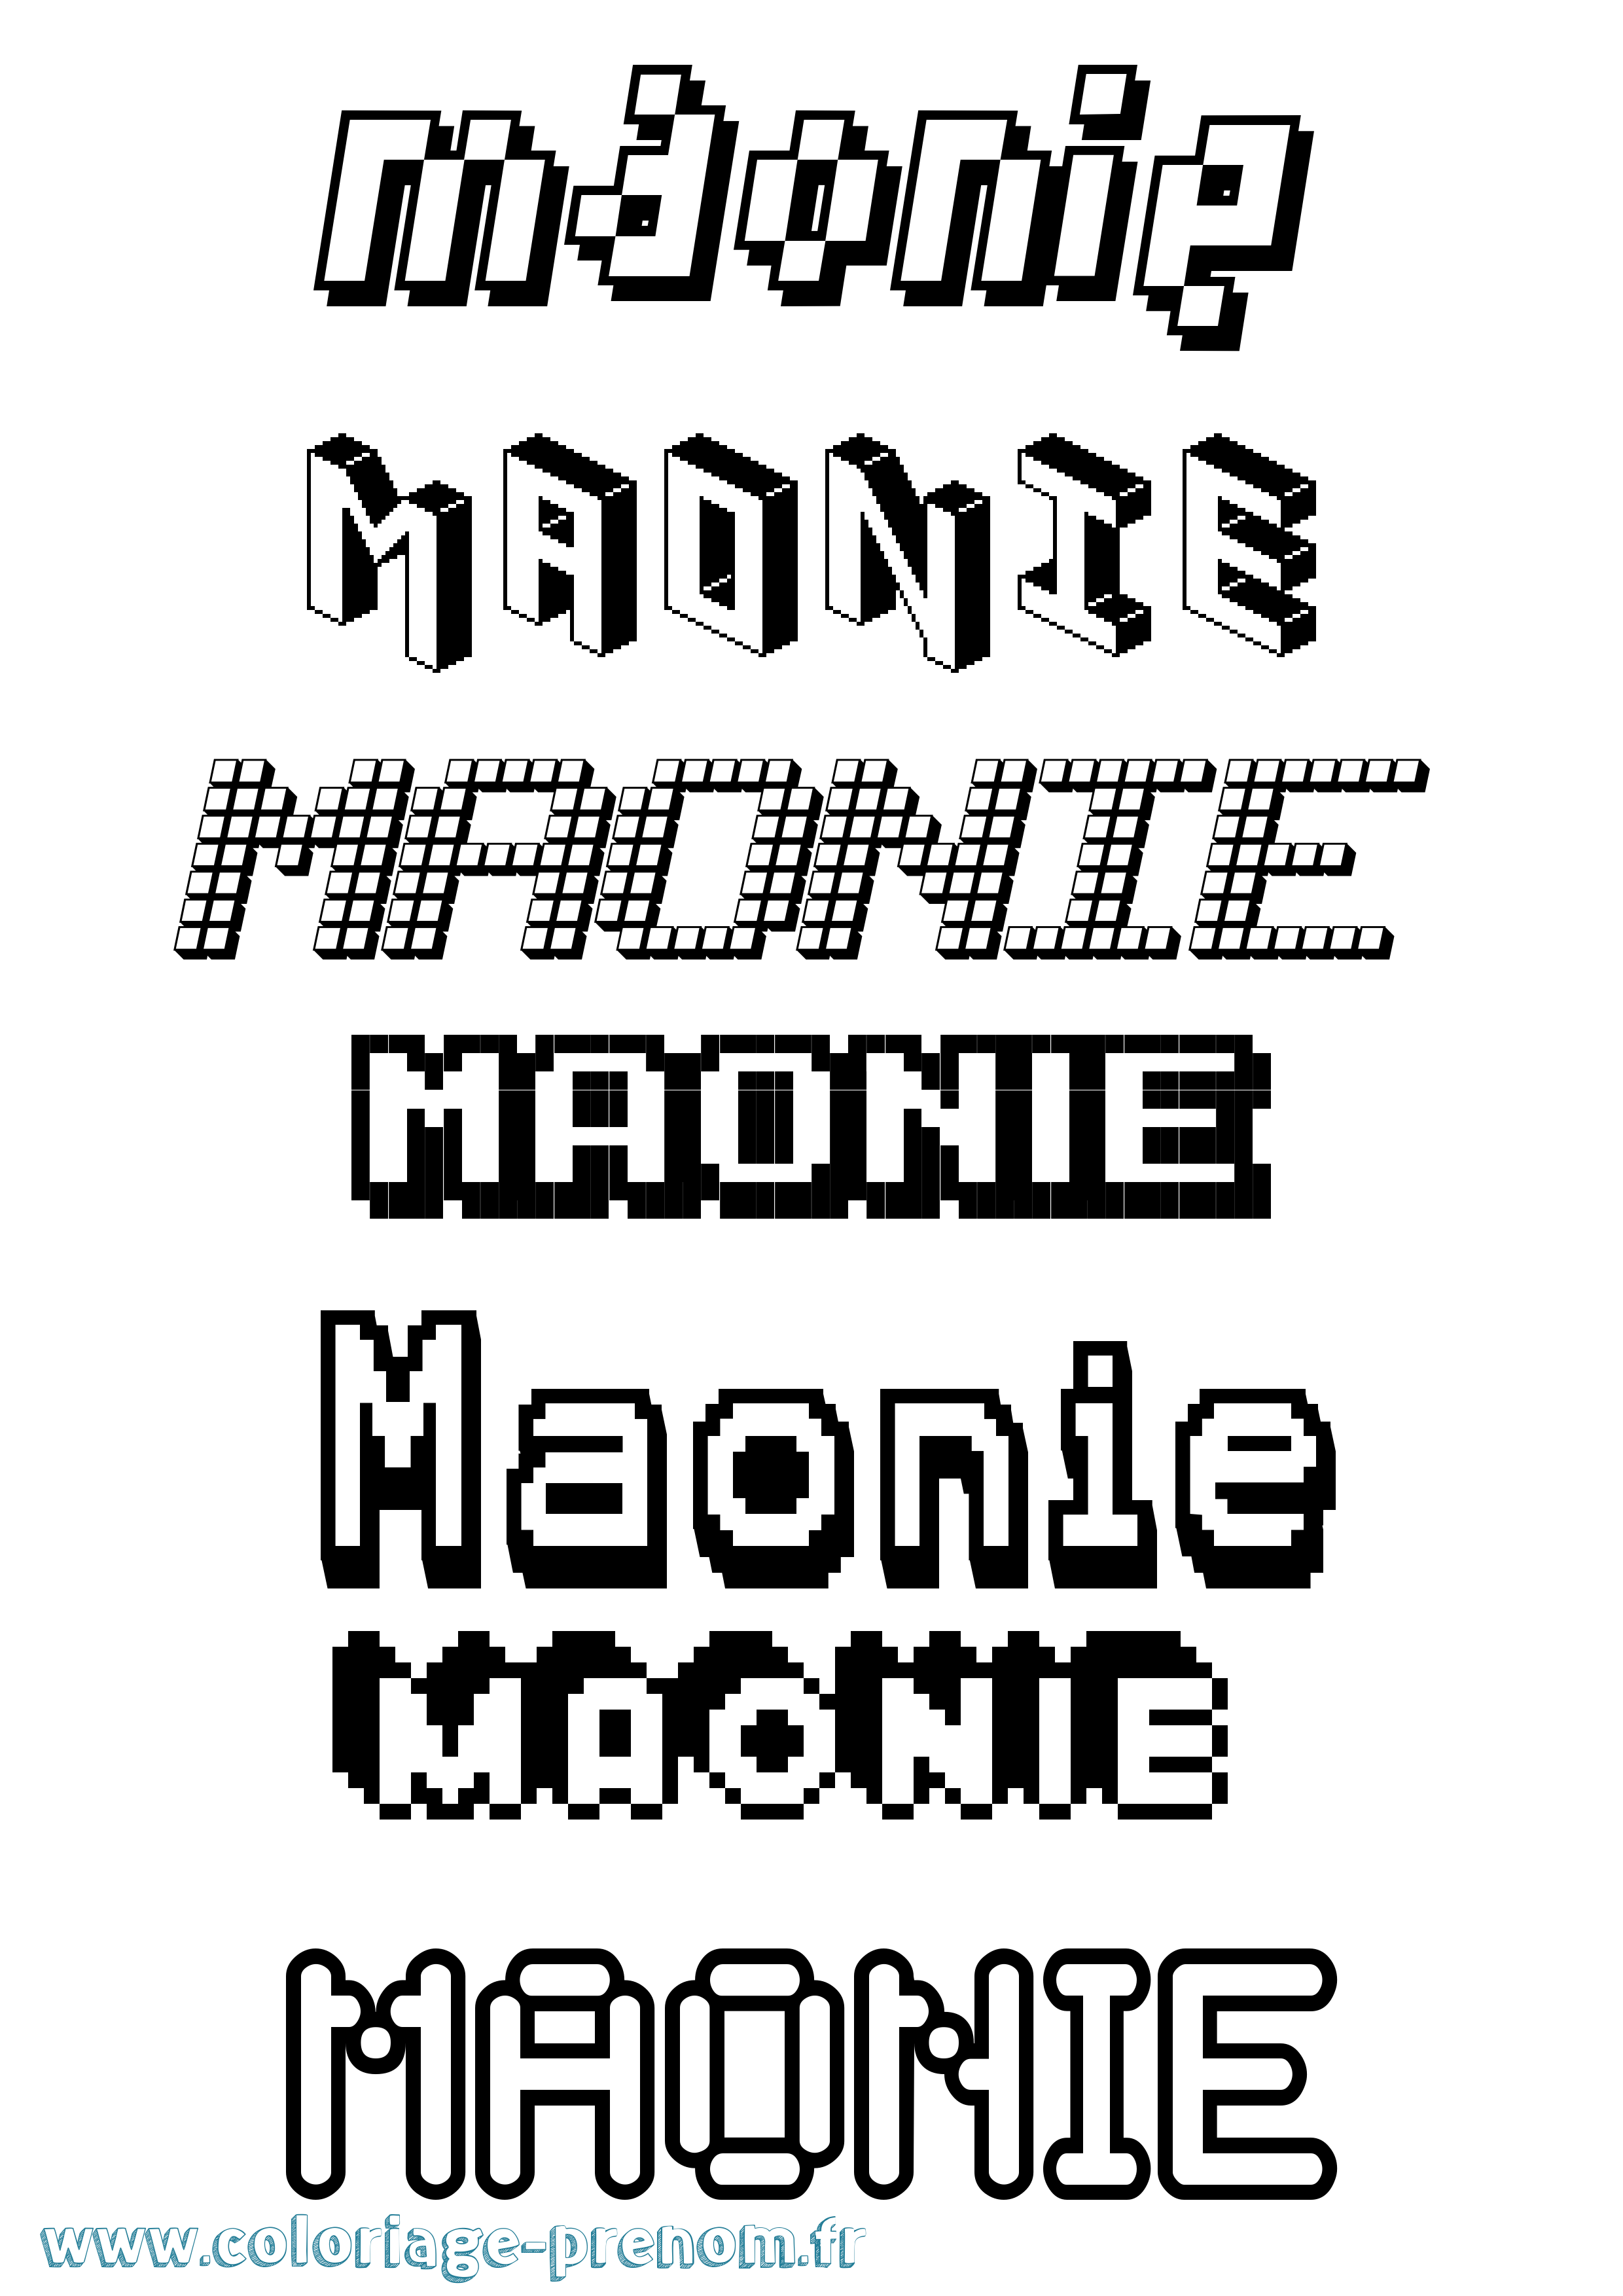 Coloriage prénom Maonie Pixel